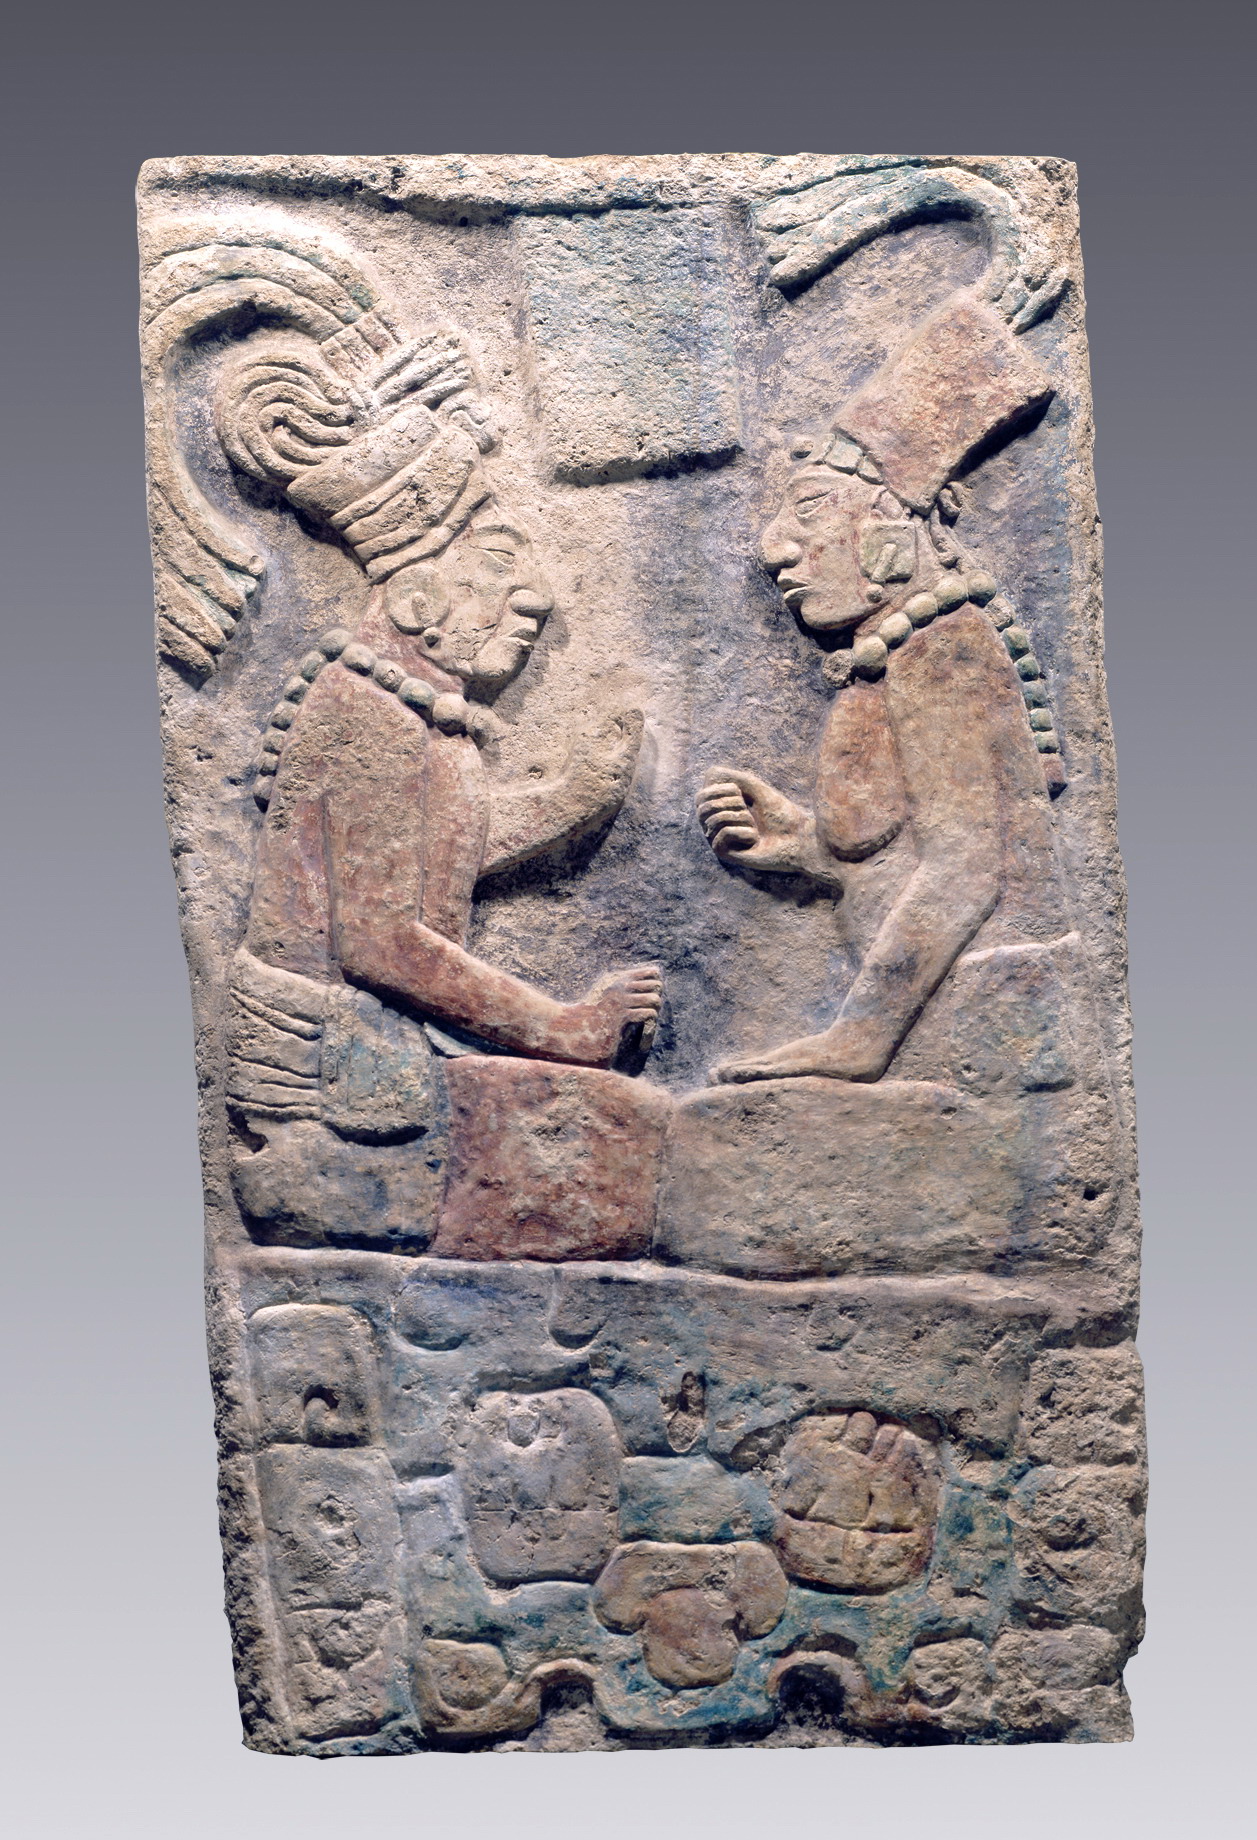 Mayan Lintel 3, Late Classic ca. A.D. 600-900